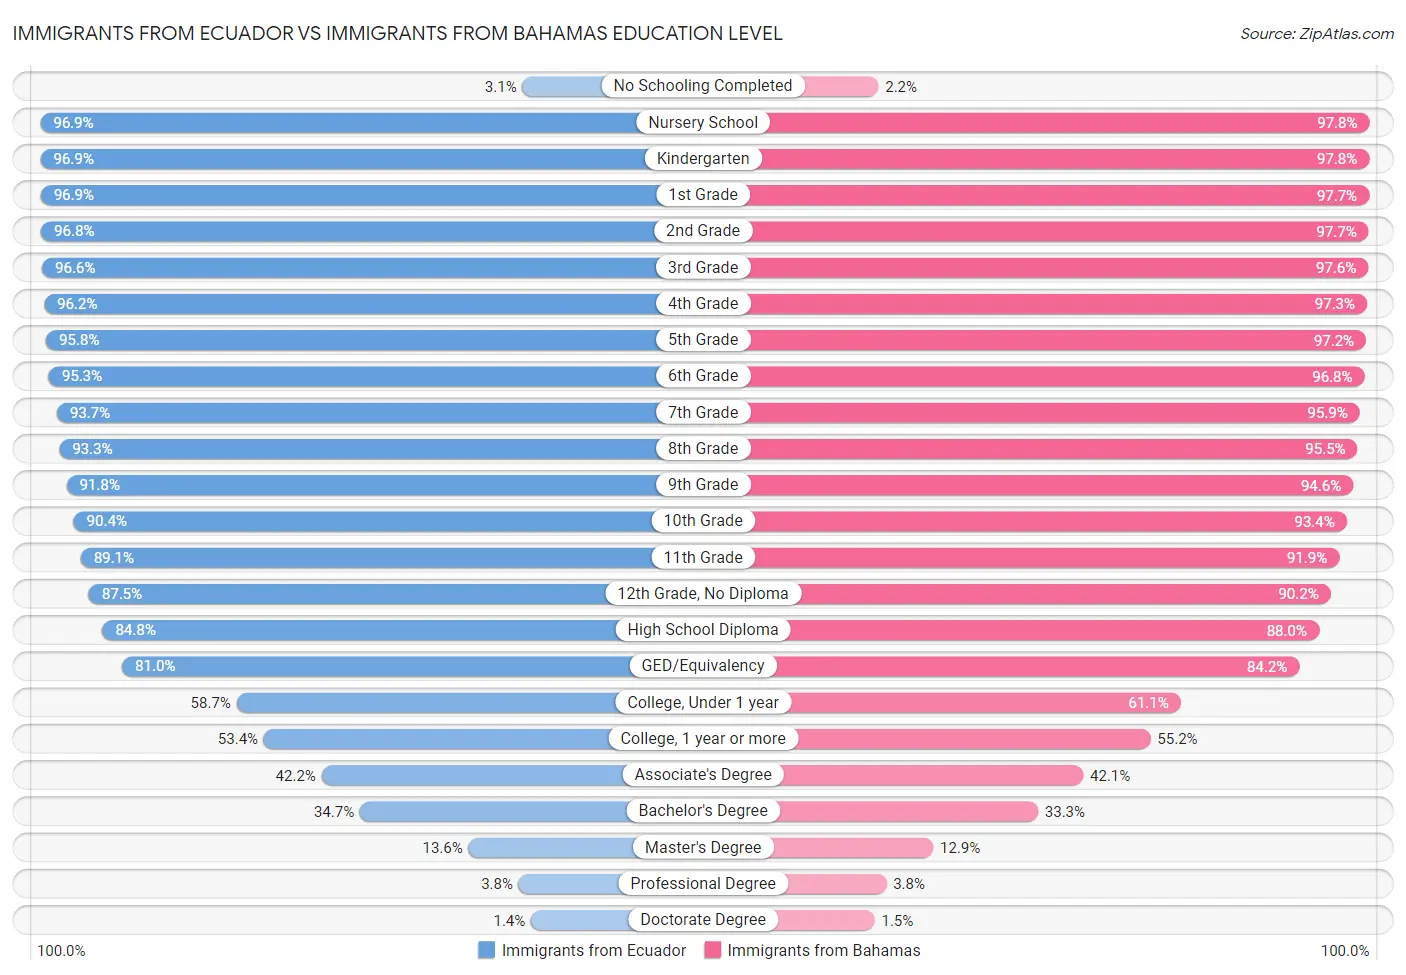 Immigrants from Ecuador vs Immigrants from Bahamas Education Level